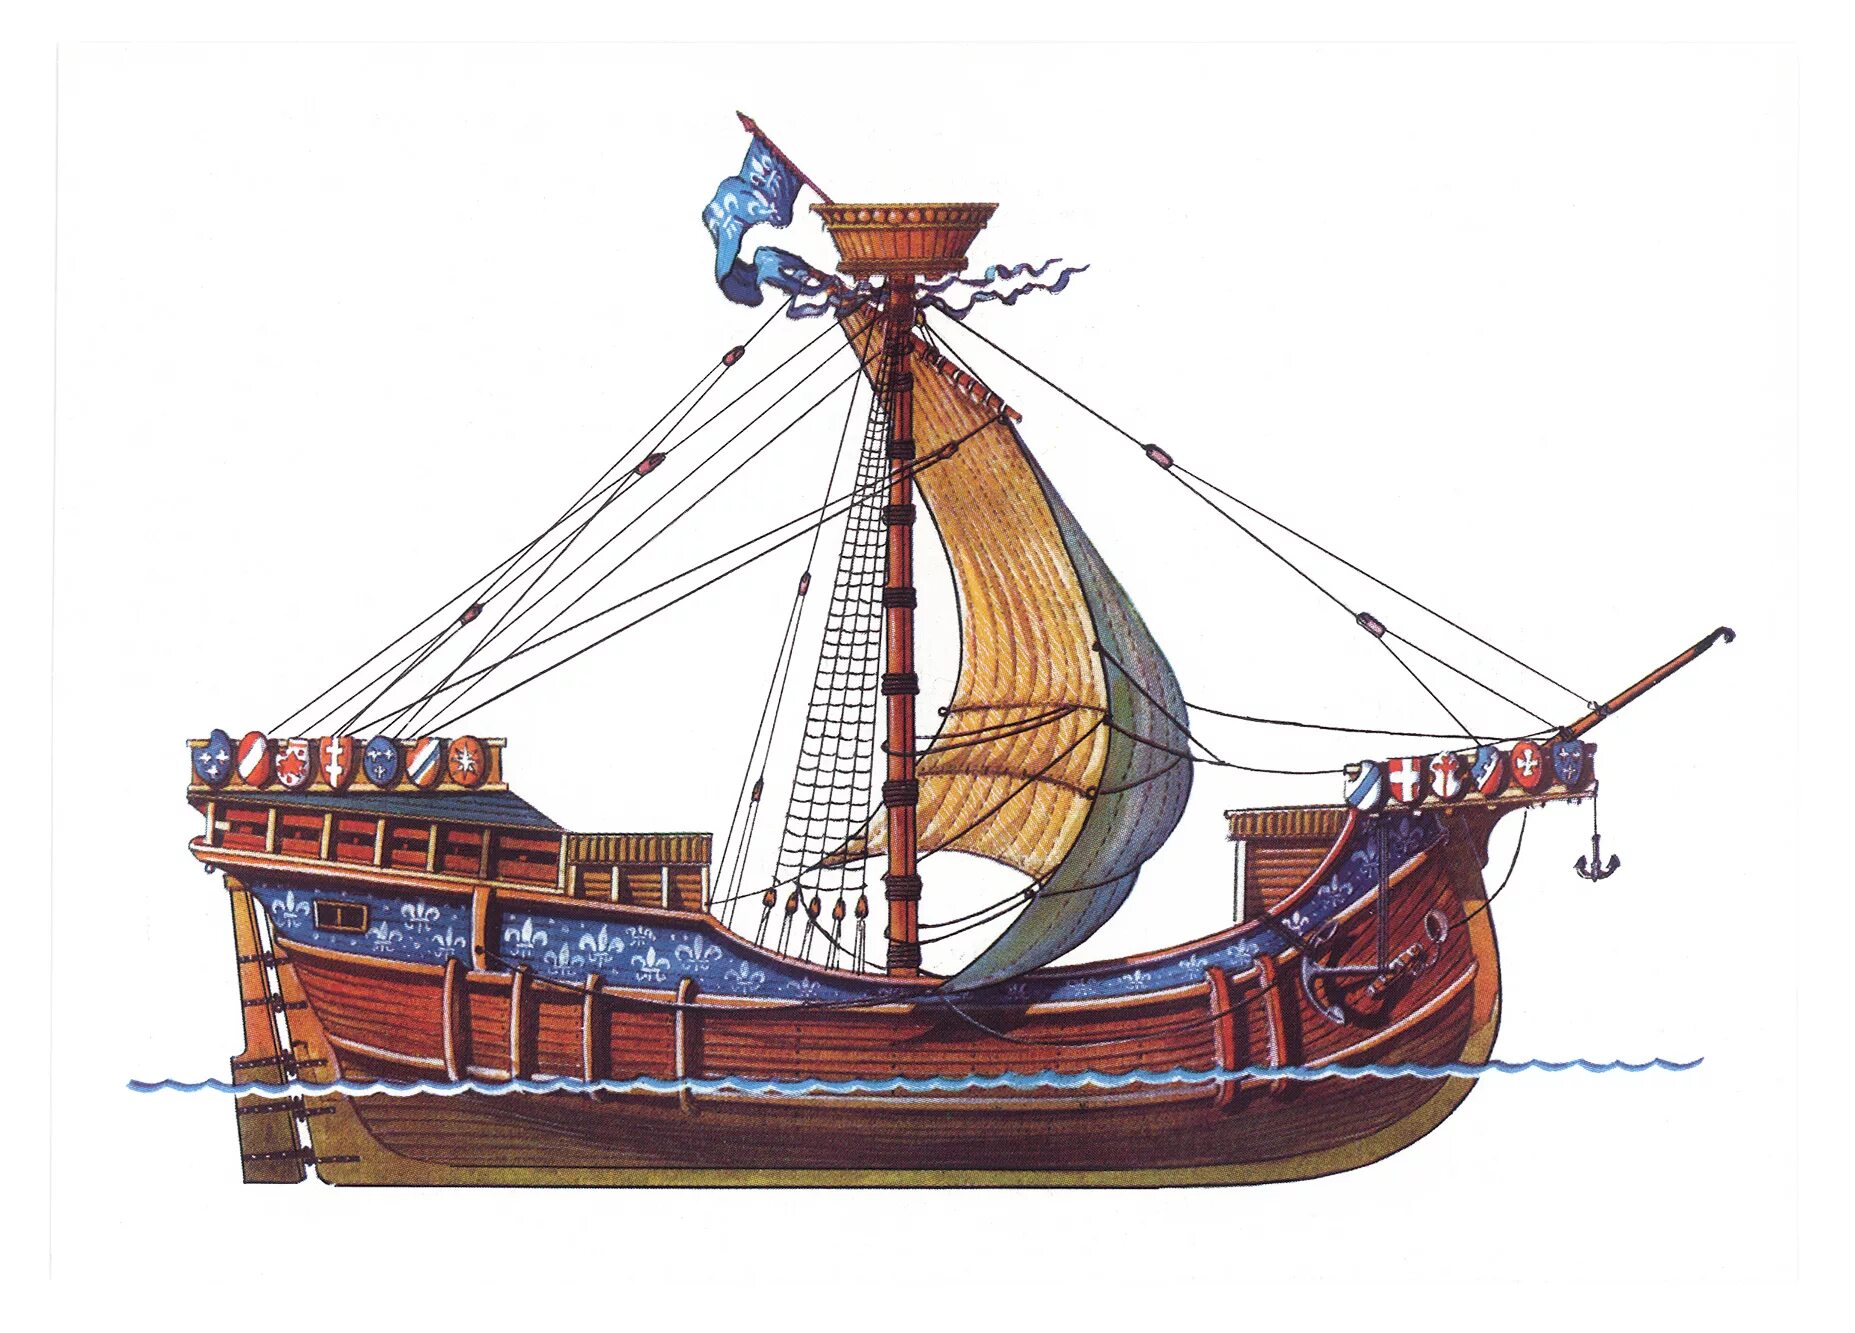 Корабль Когг Когг. Неф корабль 15 века. Неф корабль средневековья. Византийский Неф корабль.